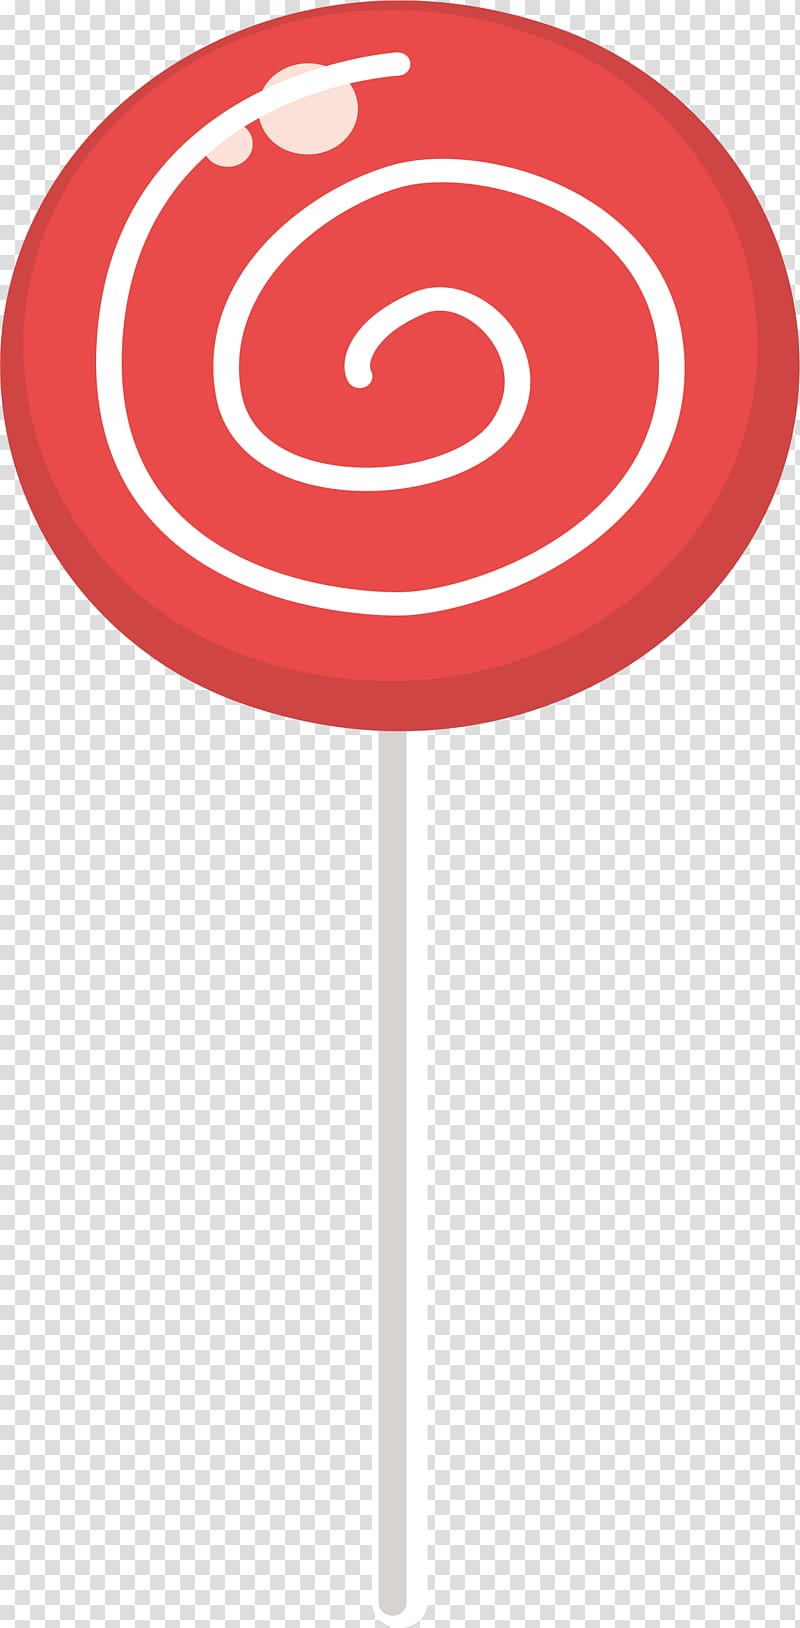 Lollipop Spiral, Red spiral lollipop transparent background PNG clipart